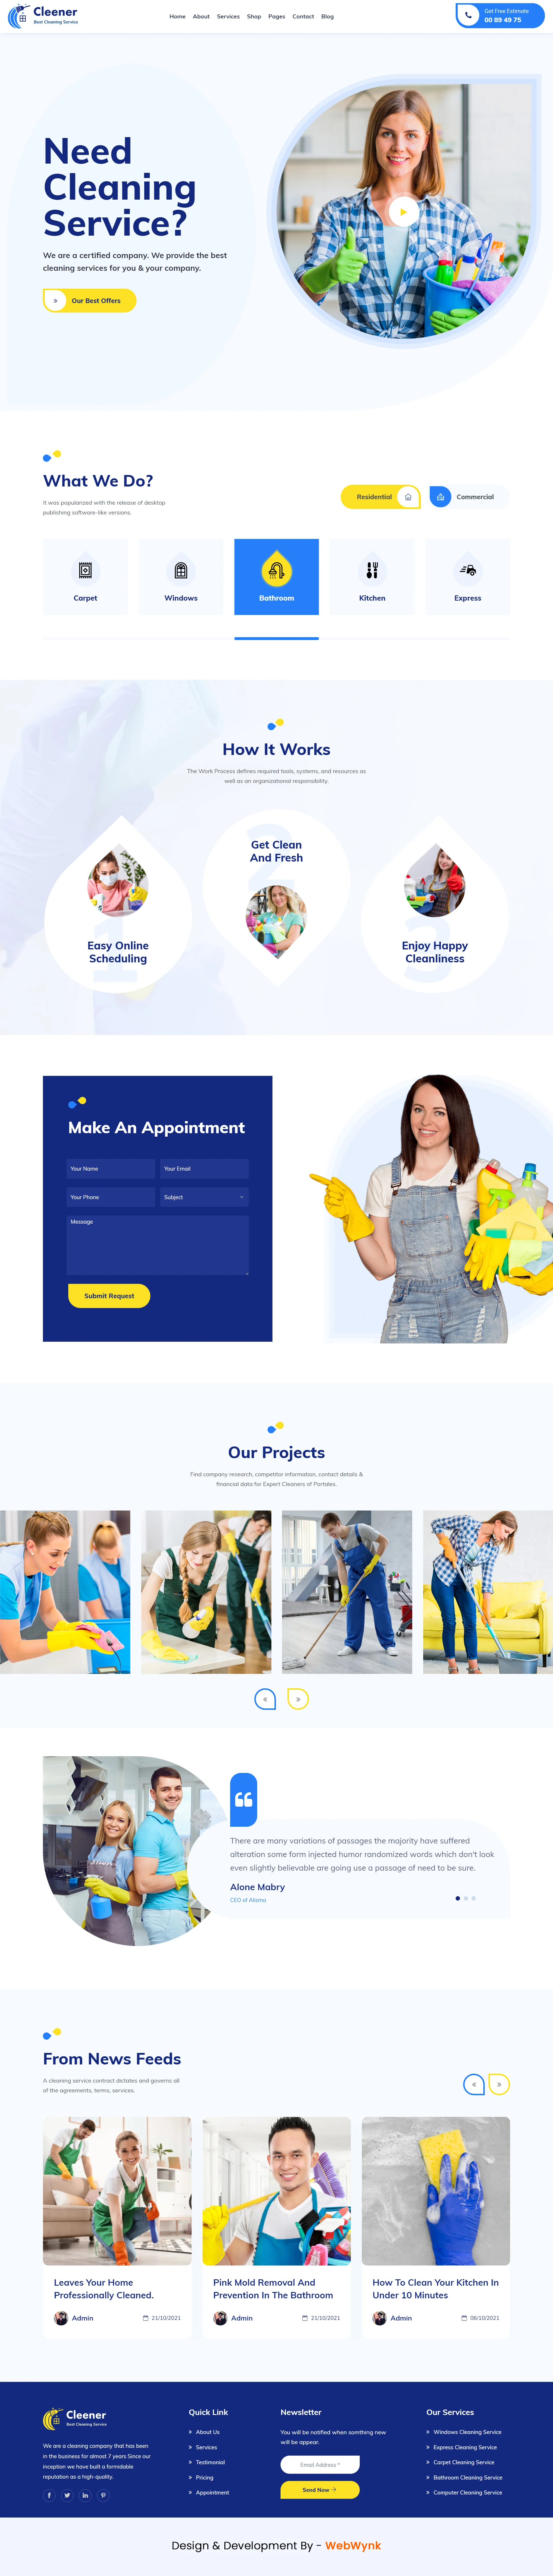 cleaning-service-website-design-webwynk